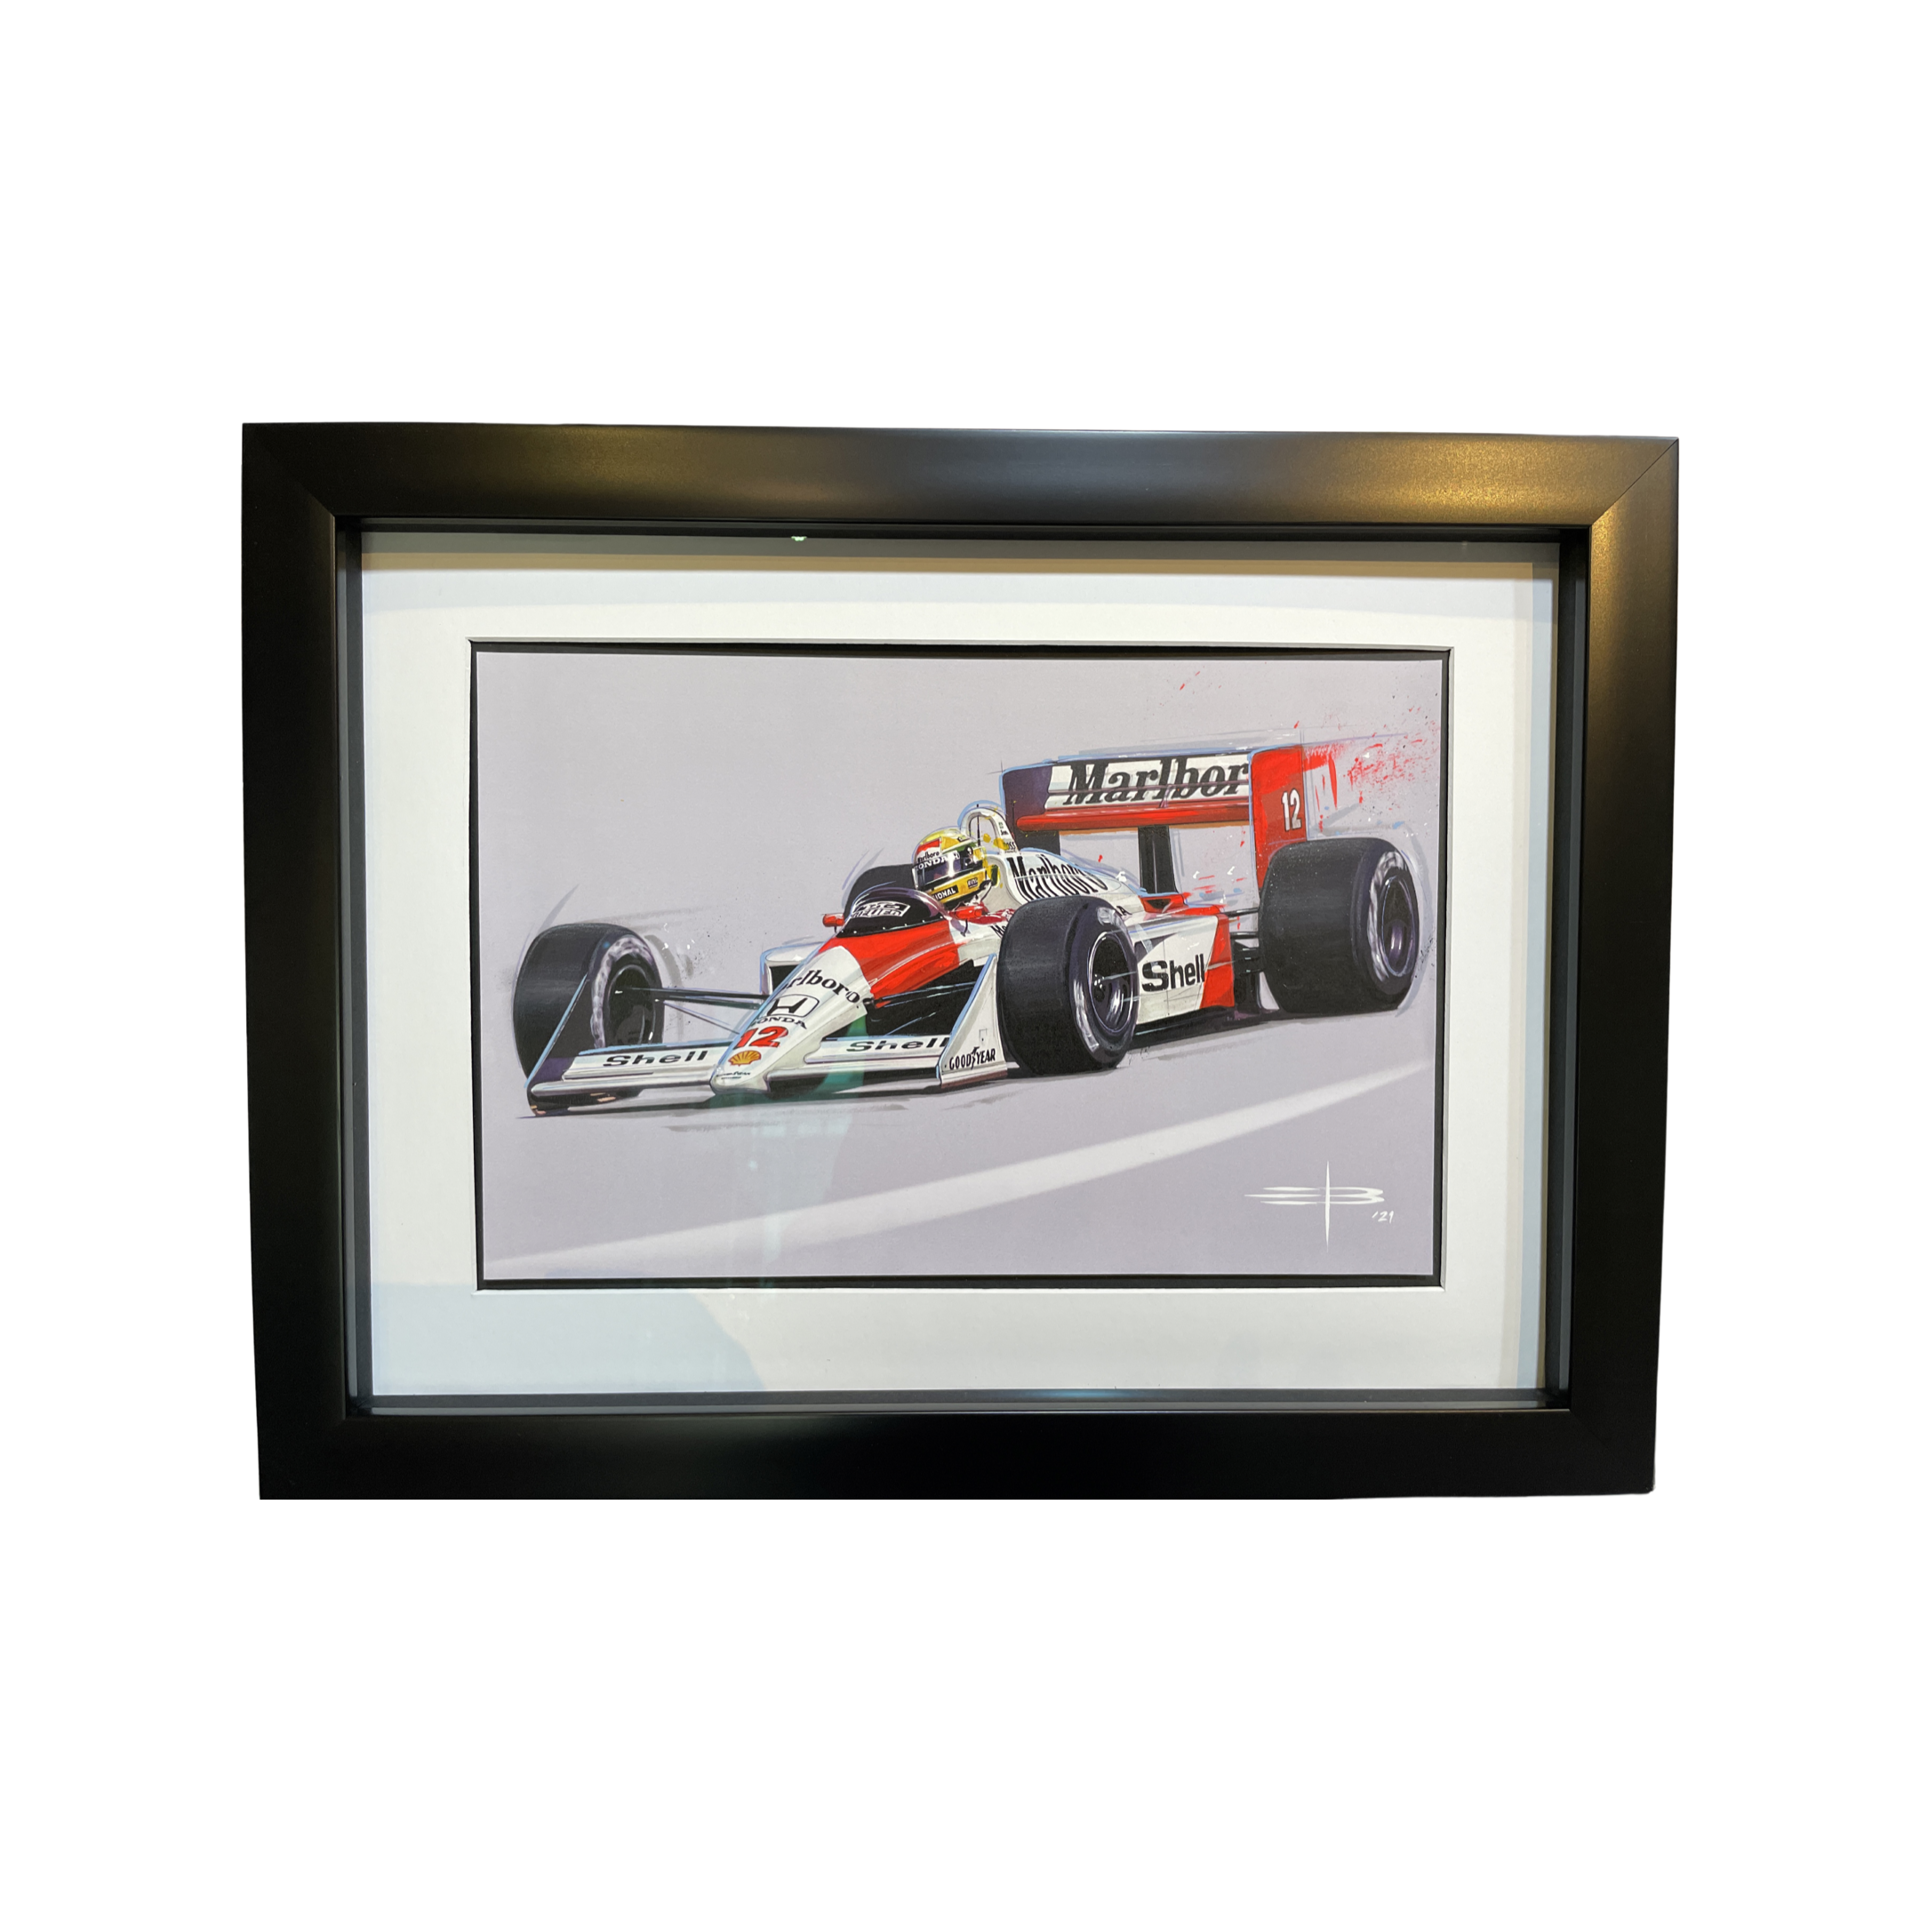 “Formula 1 Honda” by Emile Bouret